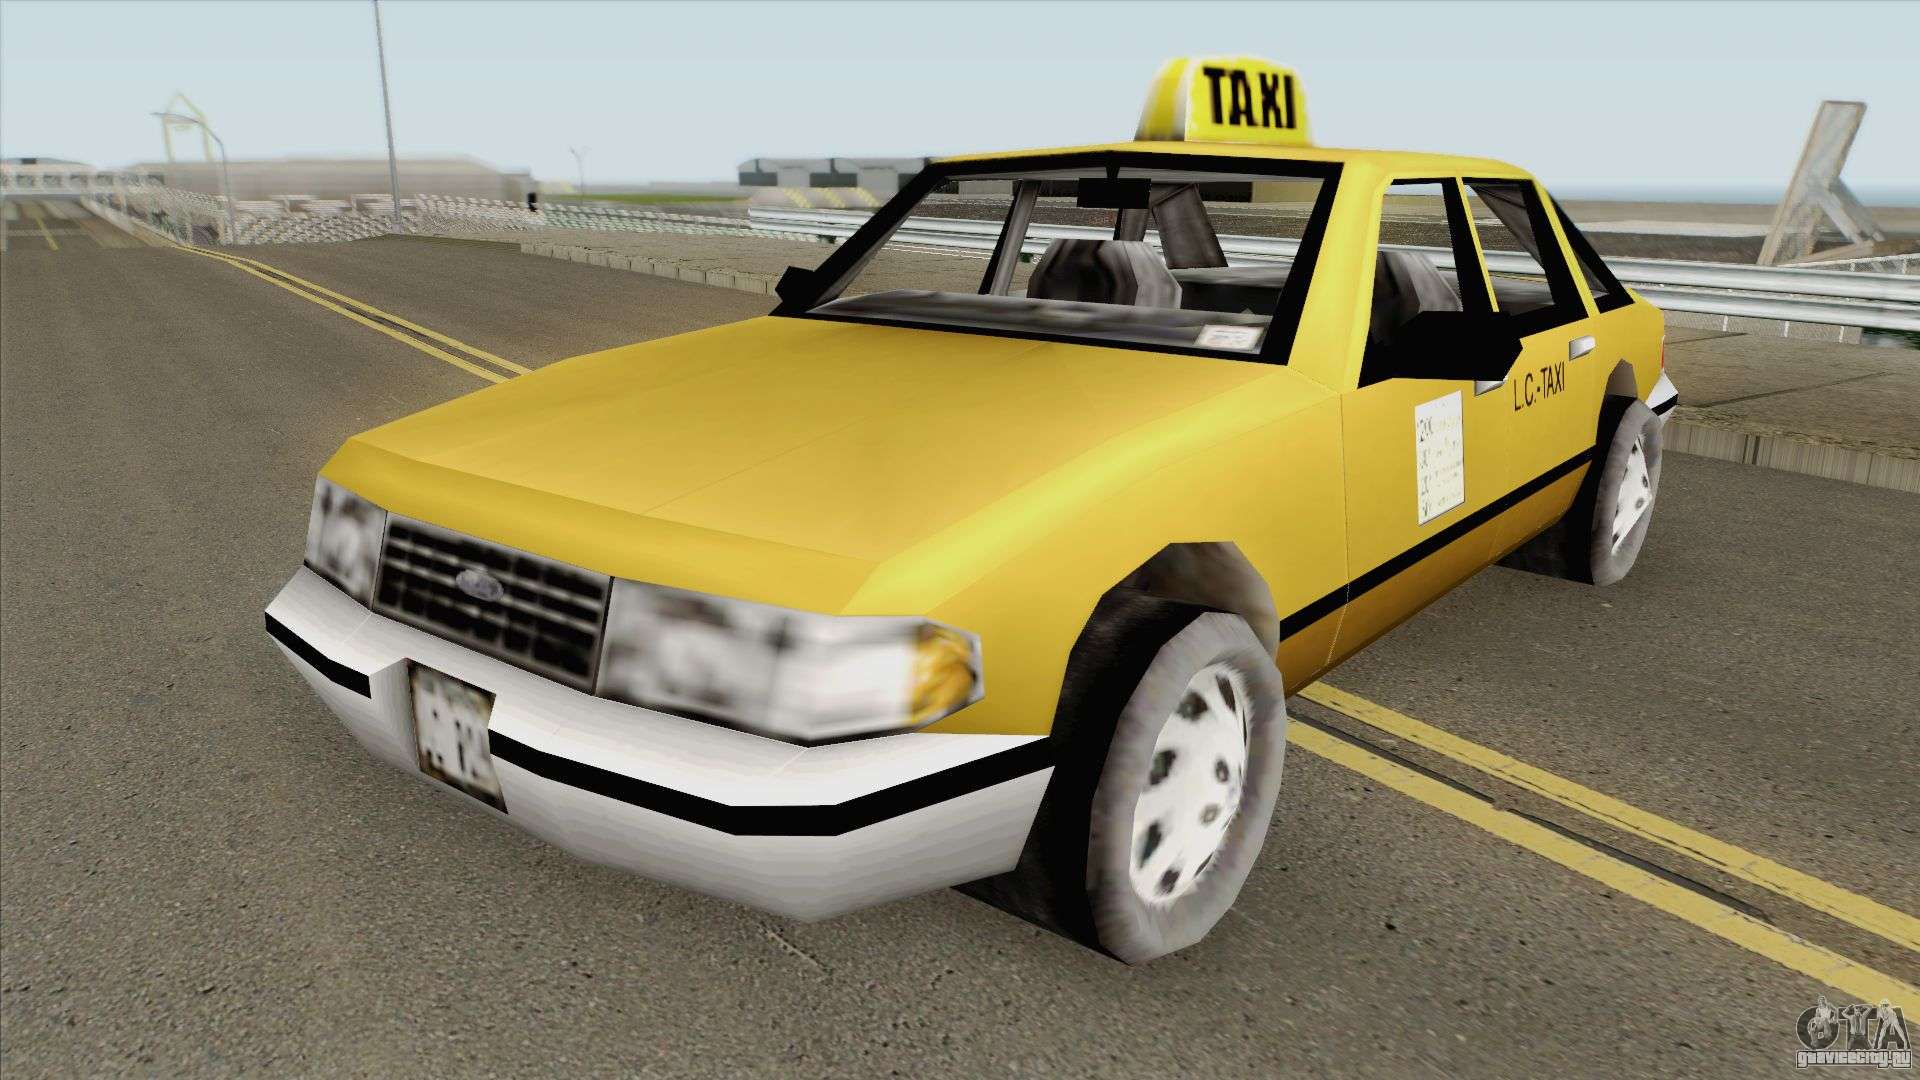 Peugeot taxi для gta 5 фото 80